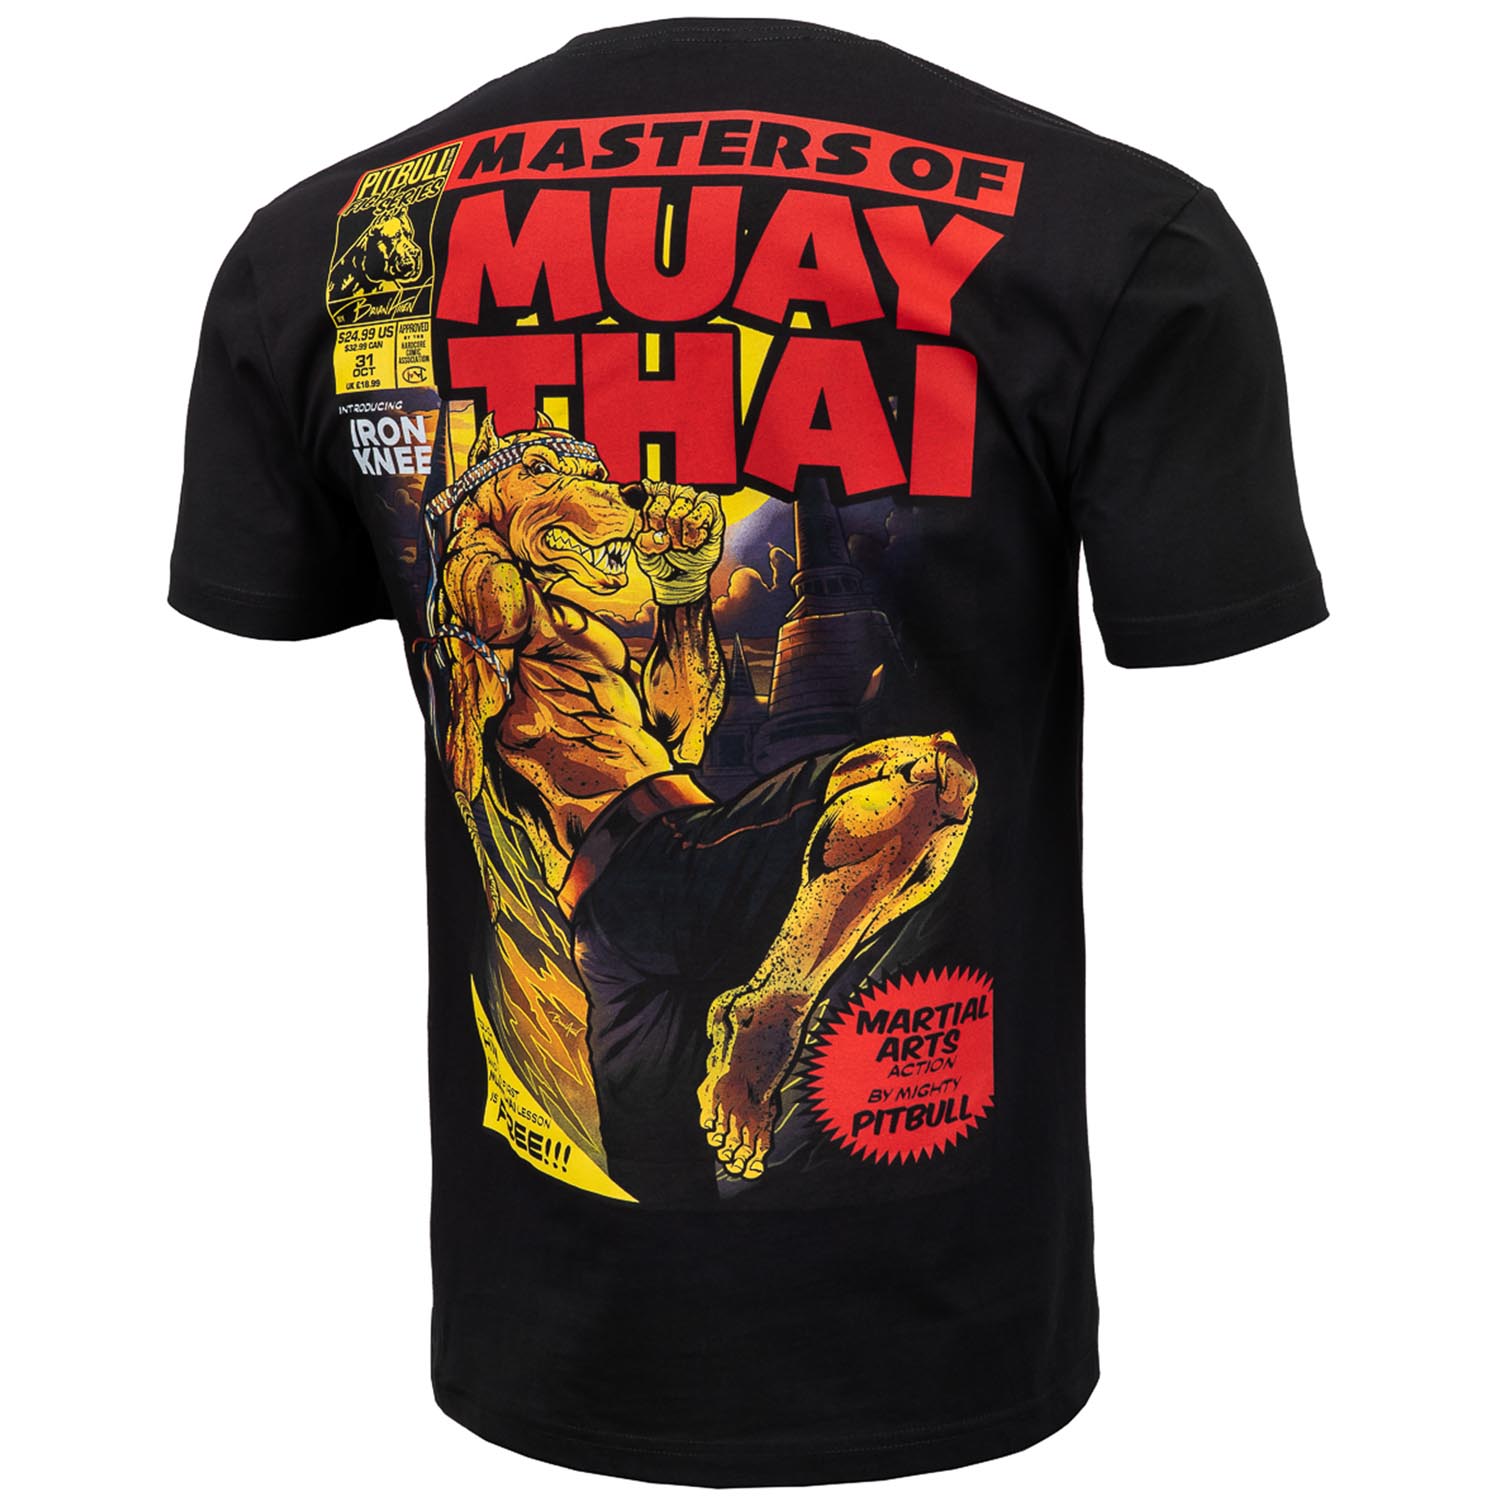 Pit Bull West Coast T-Shirt, Master Of Muay Thai, schwarz